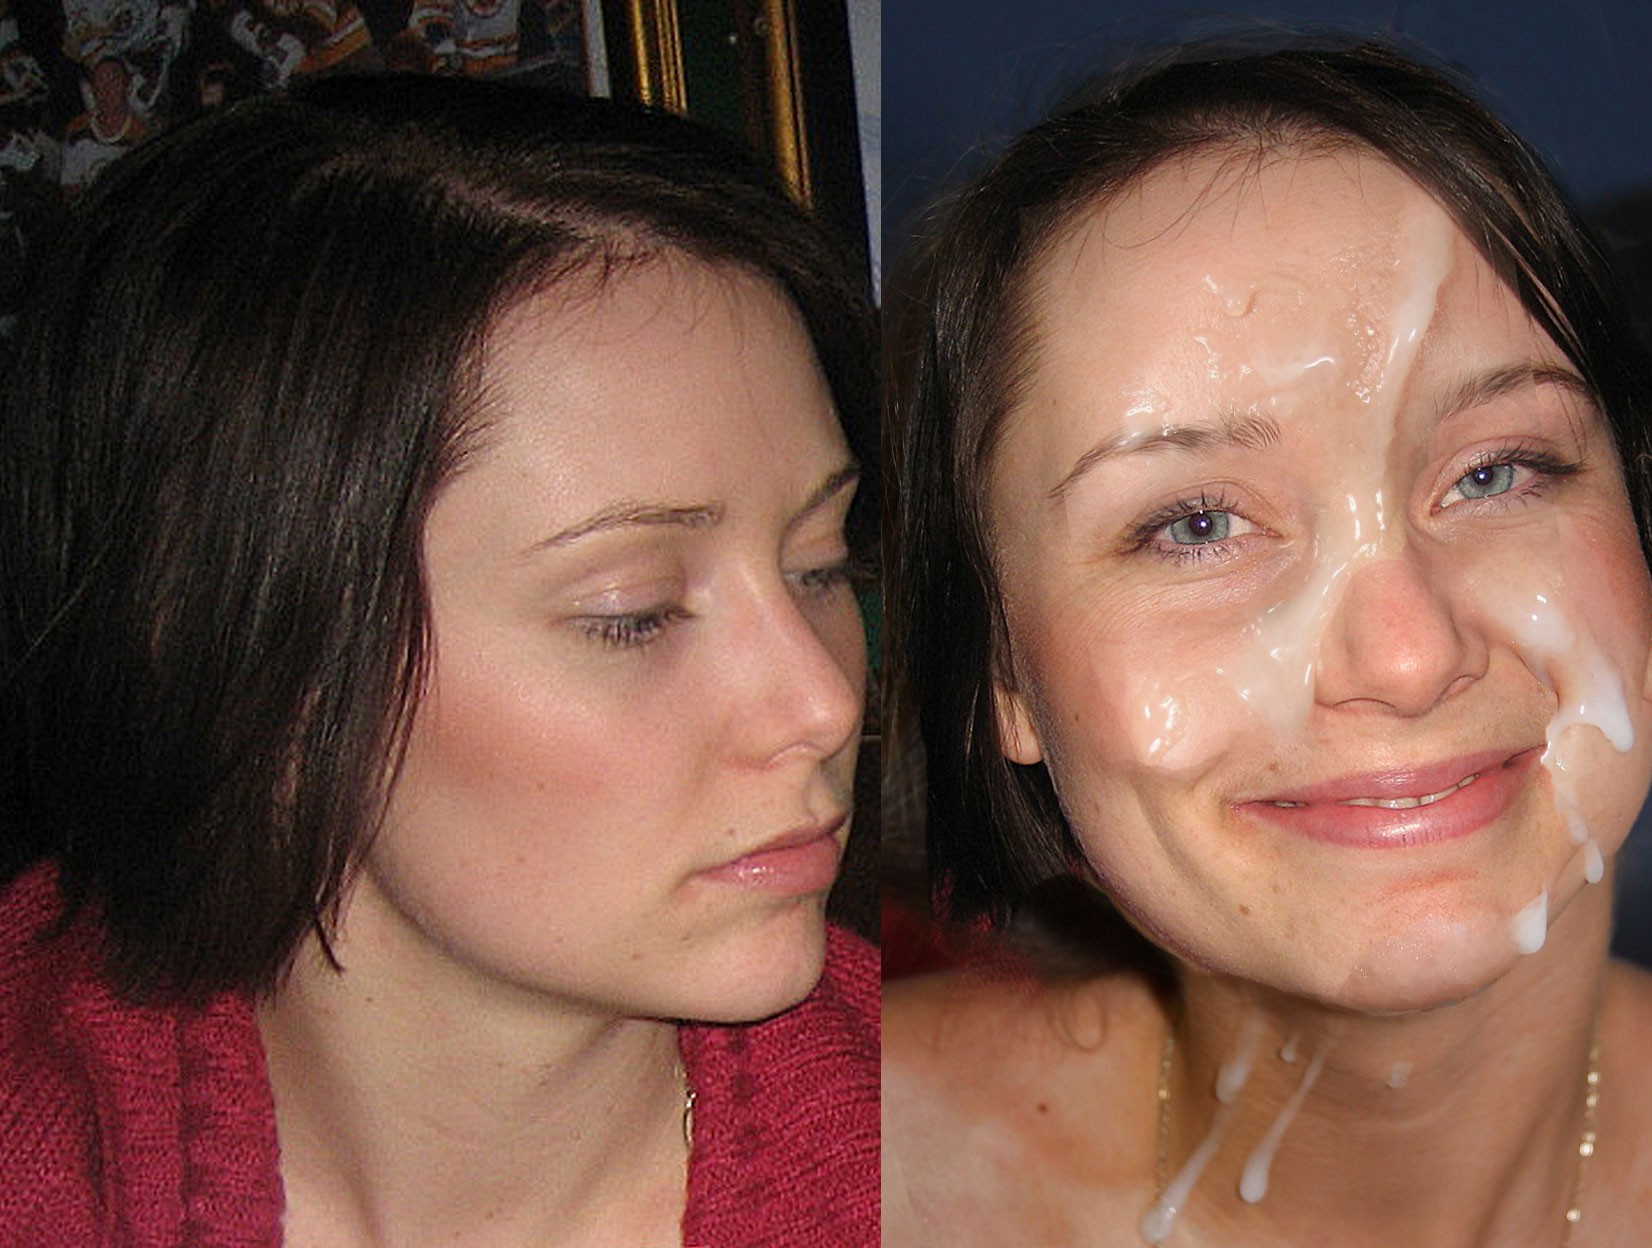 1652px x 1248px - Before / After facial cumshot (49 pictures) - Shooshtime